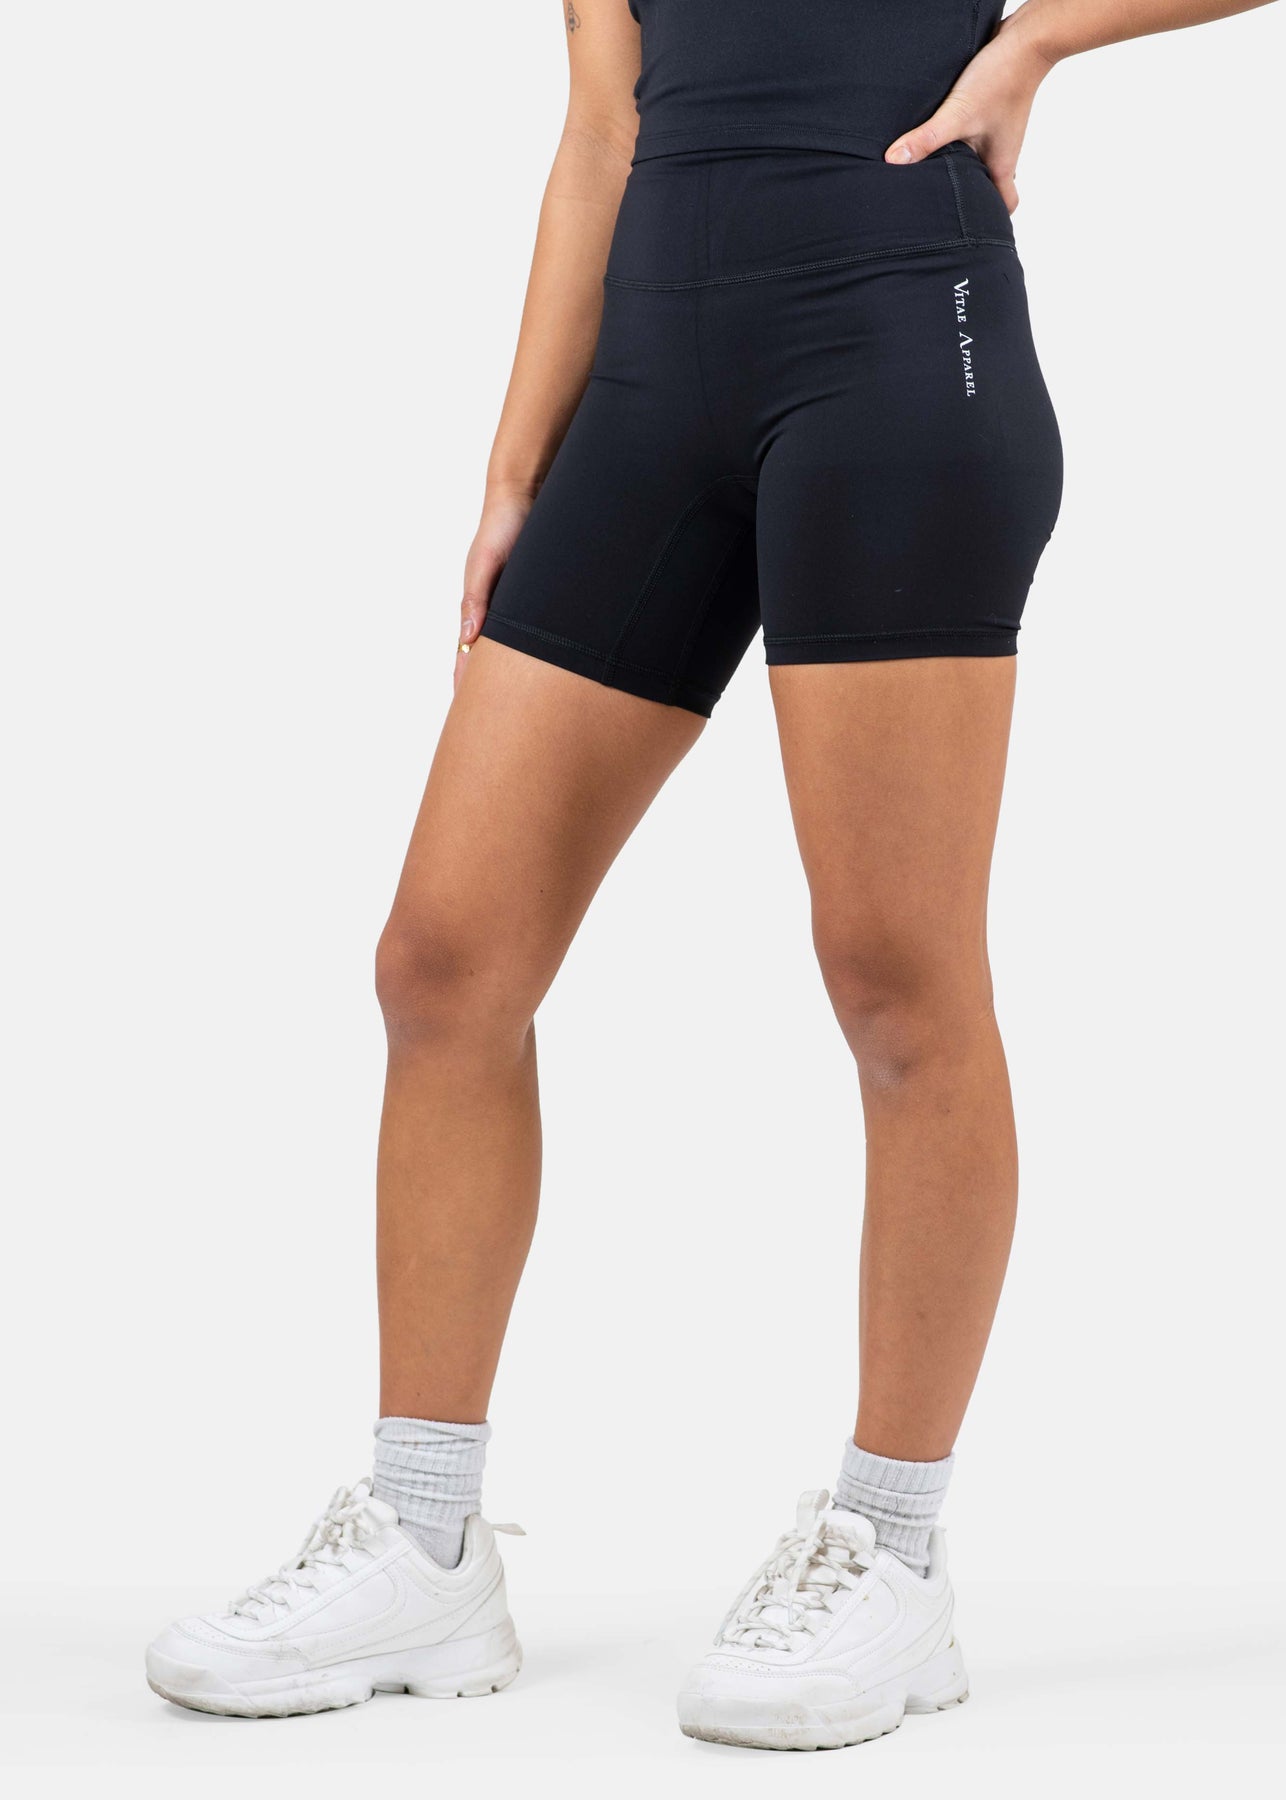 Hype Black Oversized T-Shirt and Cycle Shorts Women's Set